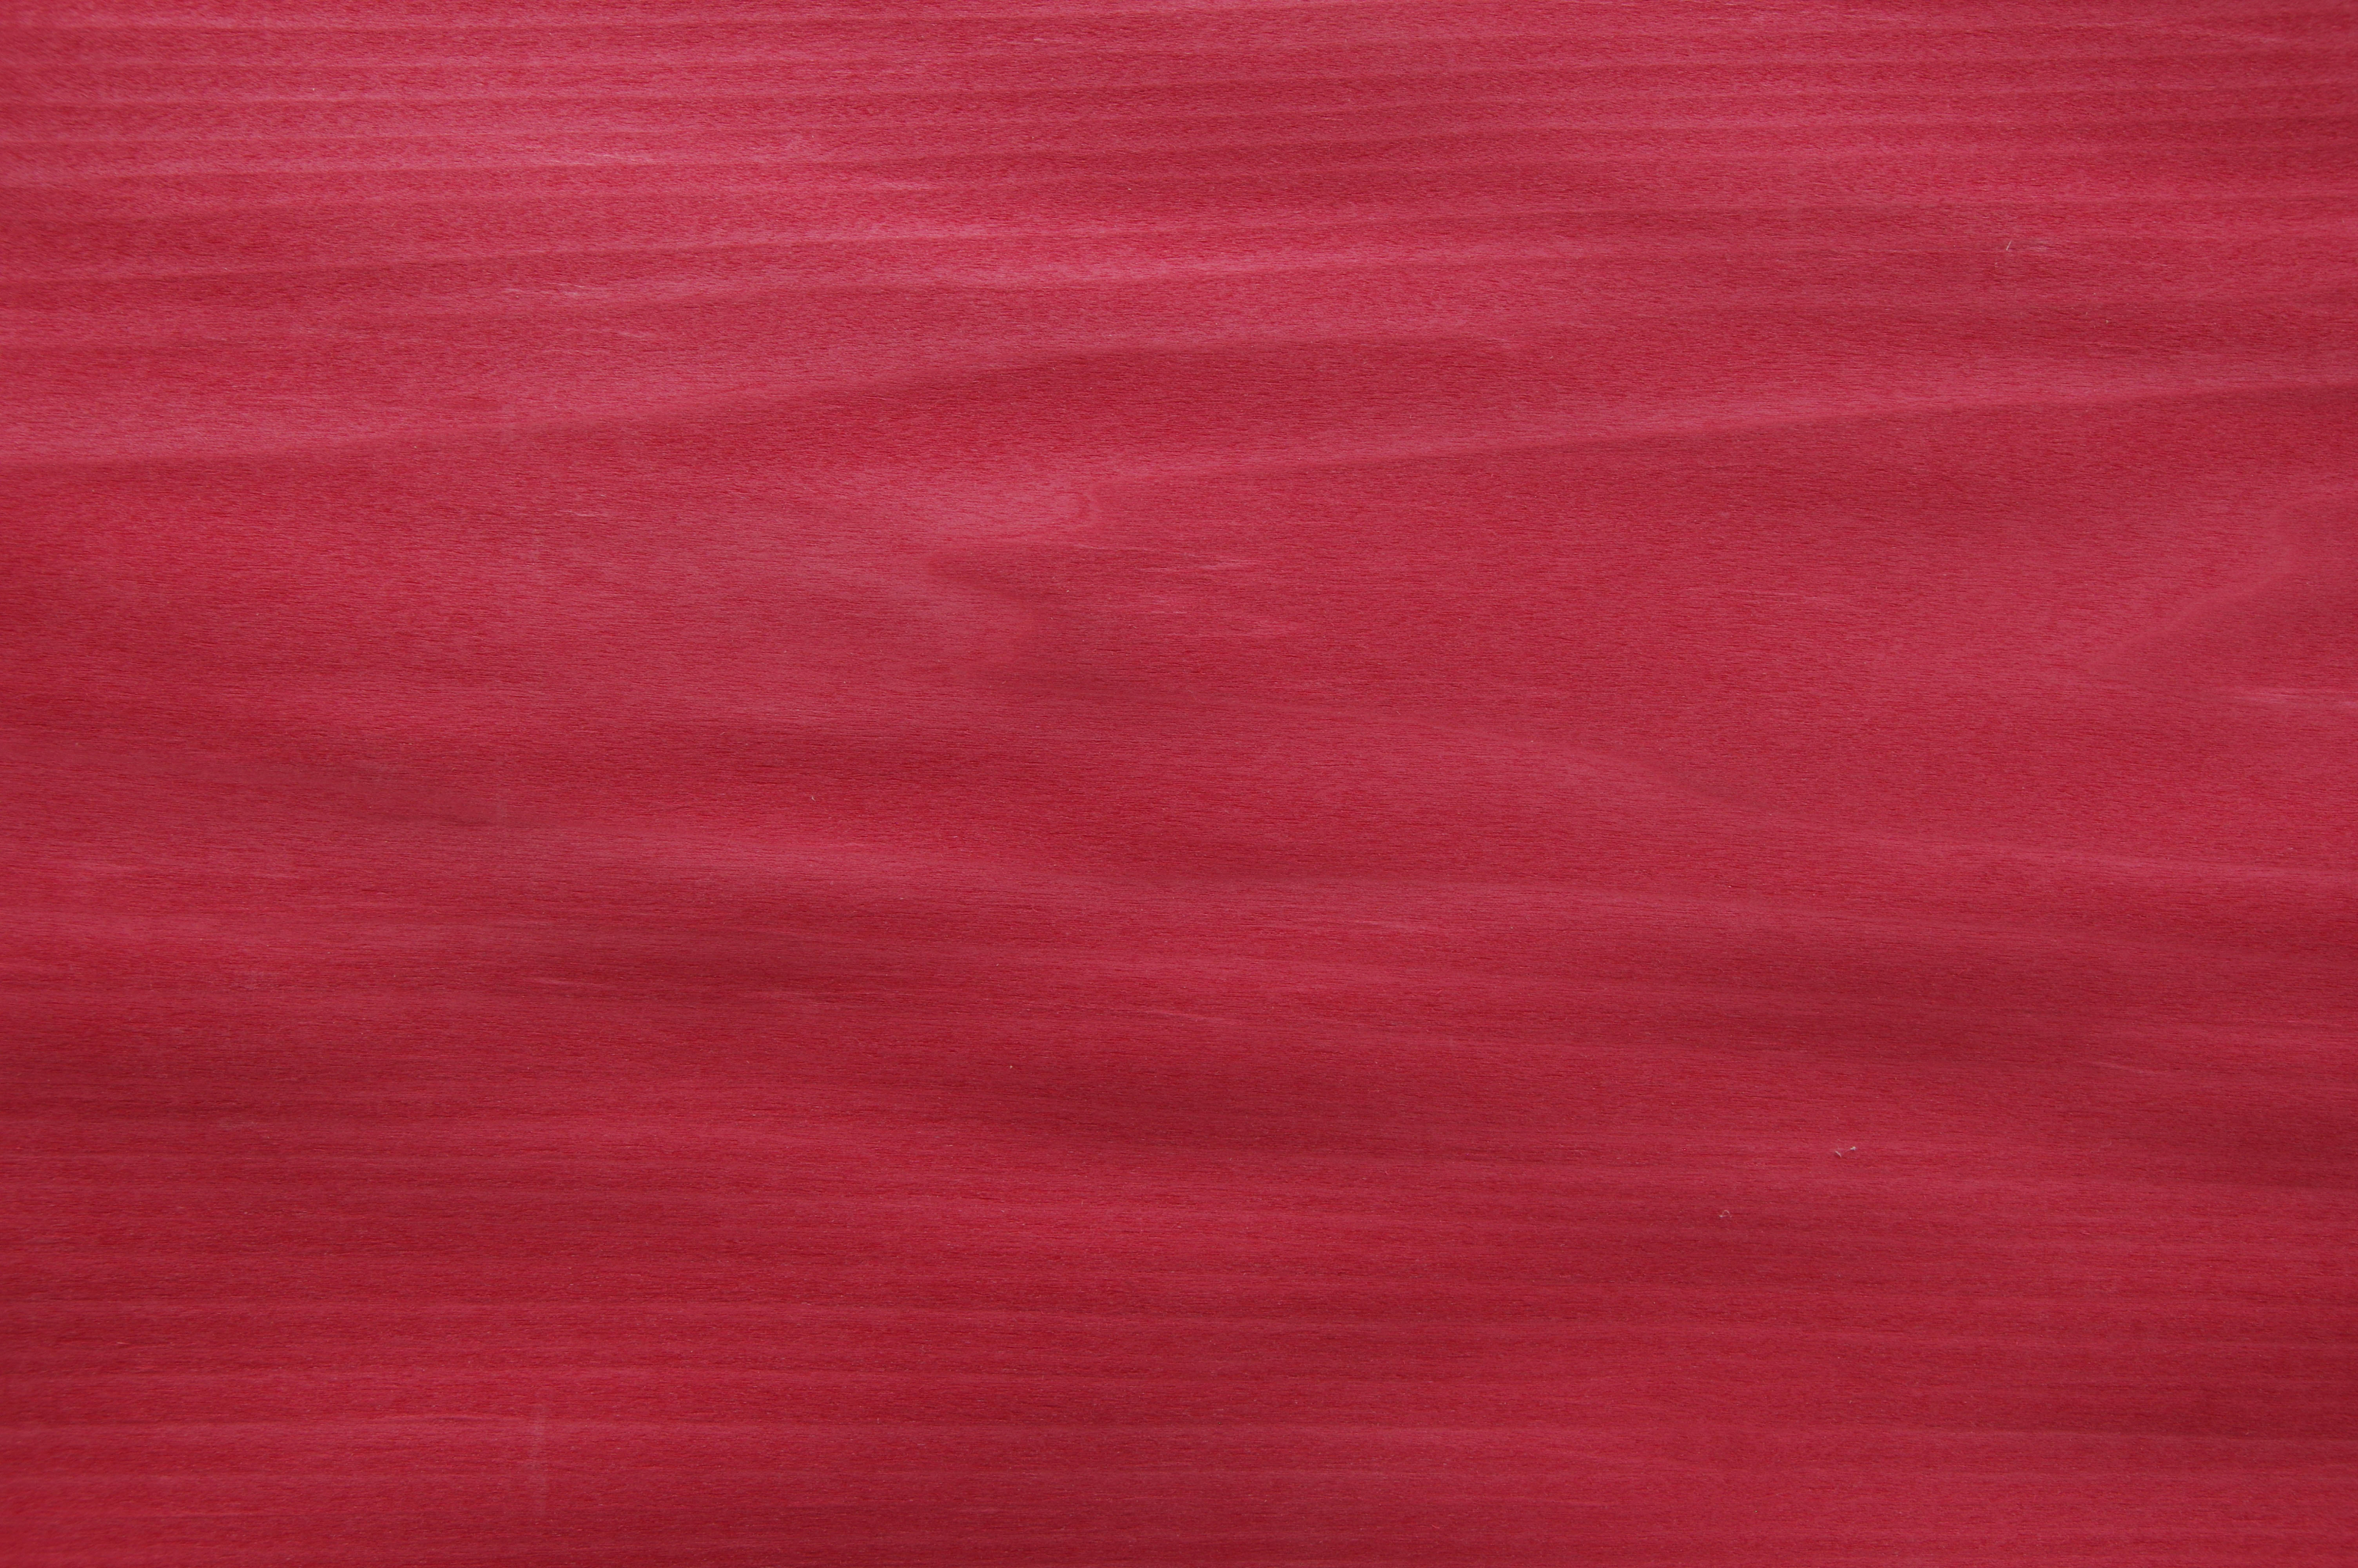 0,6mm Tulpenbaum rot gefärbtes Furnier 1,73m² Z 16 40 27